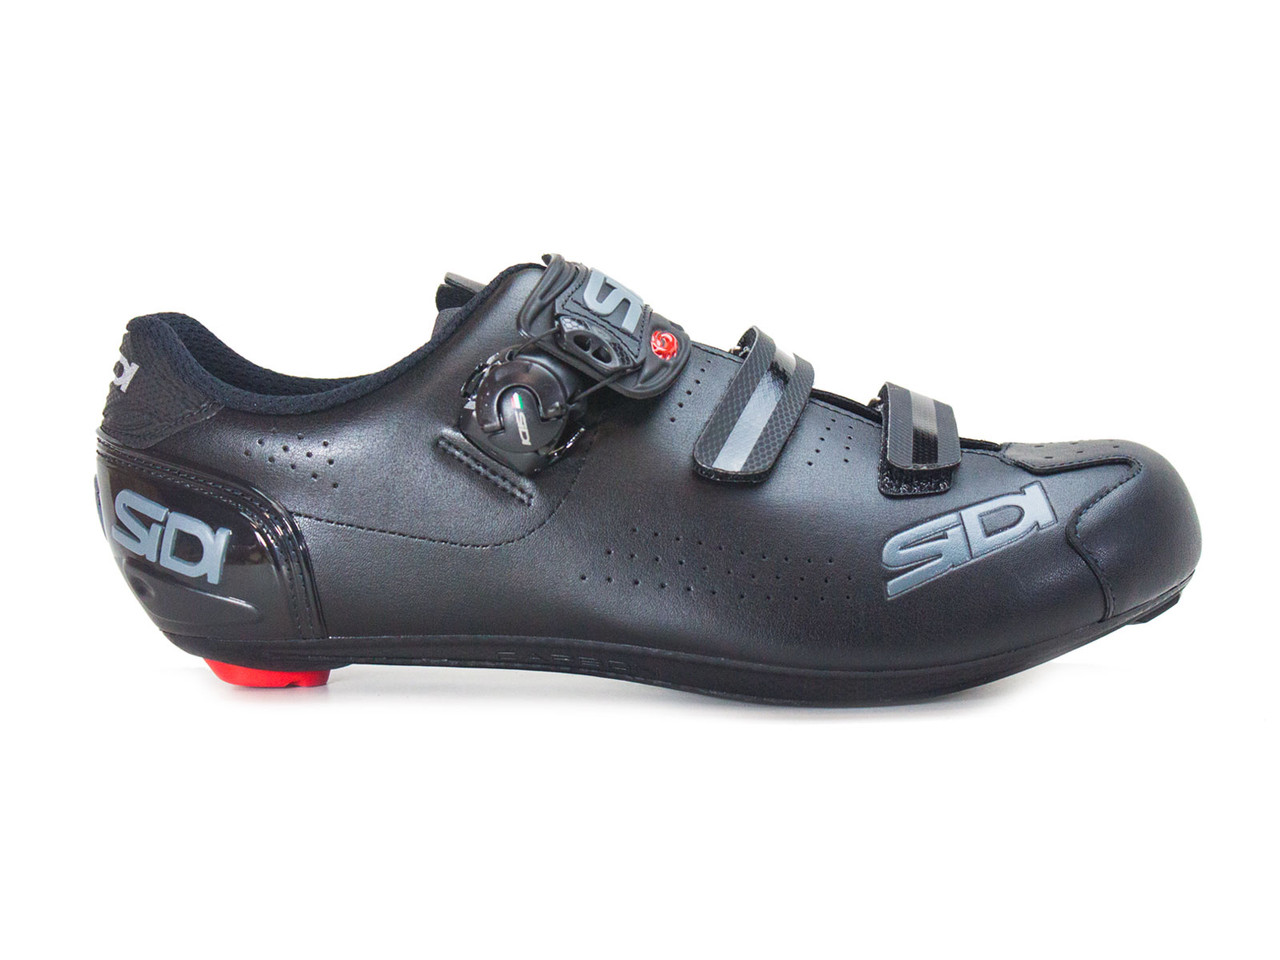 Sidi Men's Alba 2 Road Bicycle Shoes Black/Black EUR 42.5 US 8.4 